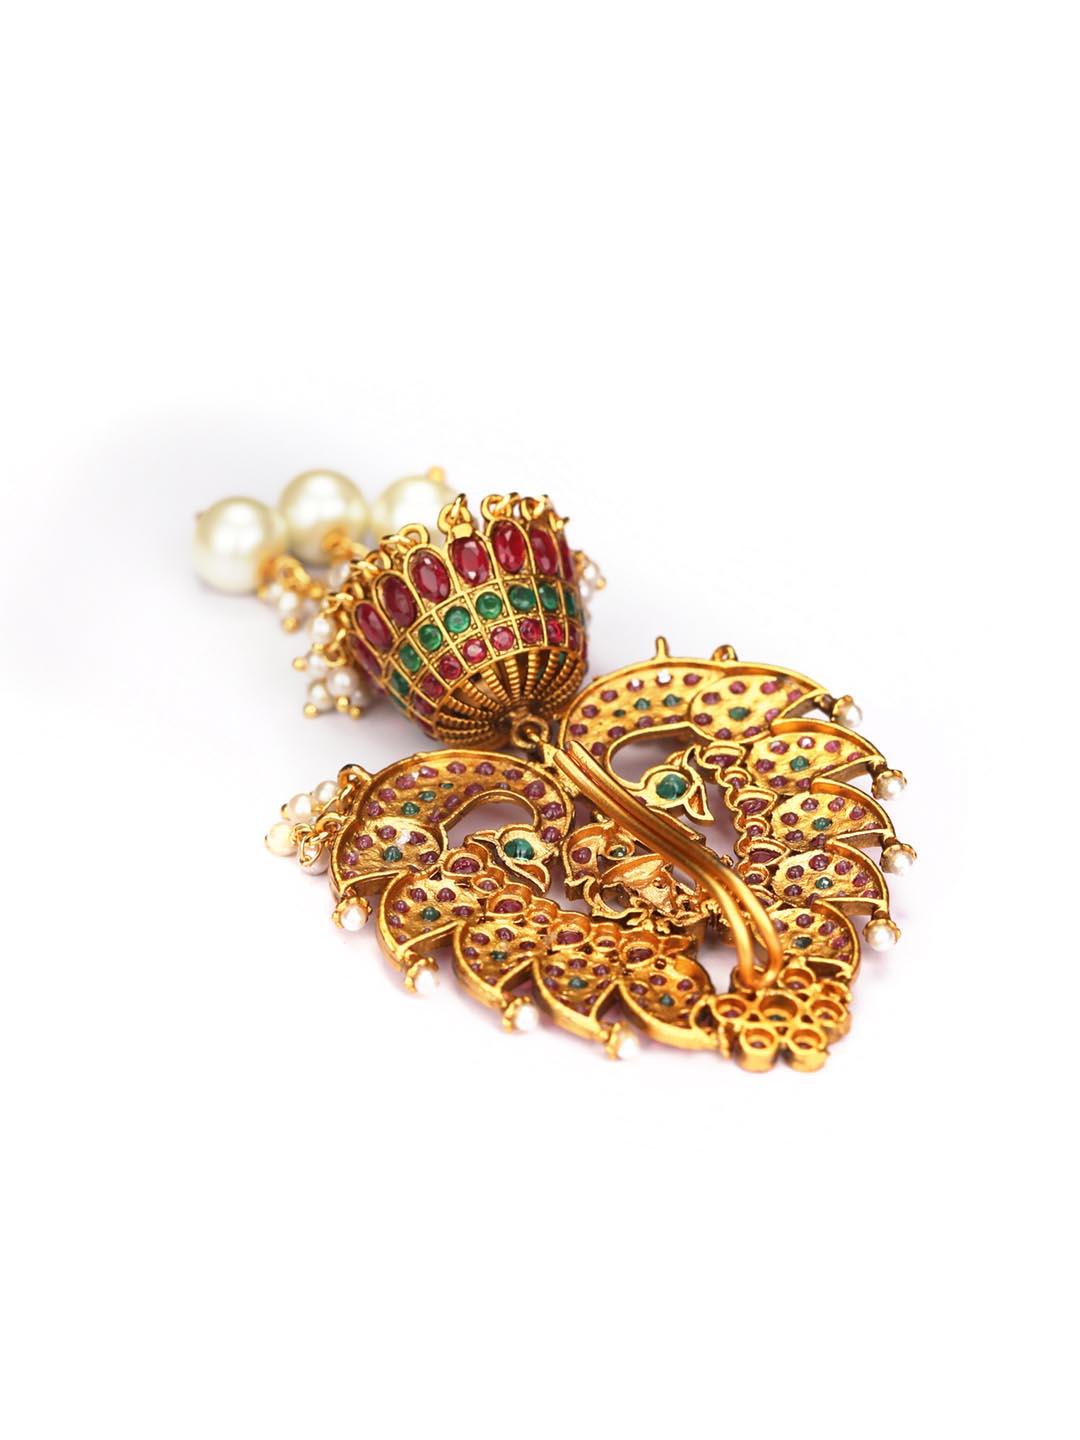 Peacock Blush - Multi-Color Kemp Stones Pearls Gold Plated Bun Hair Accessories